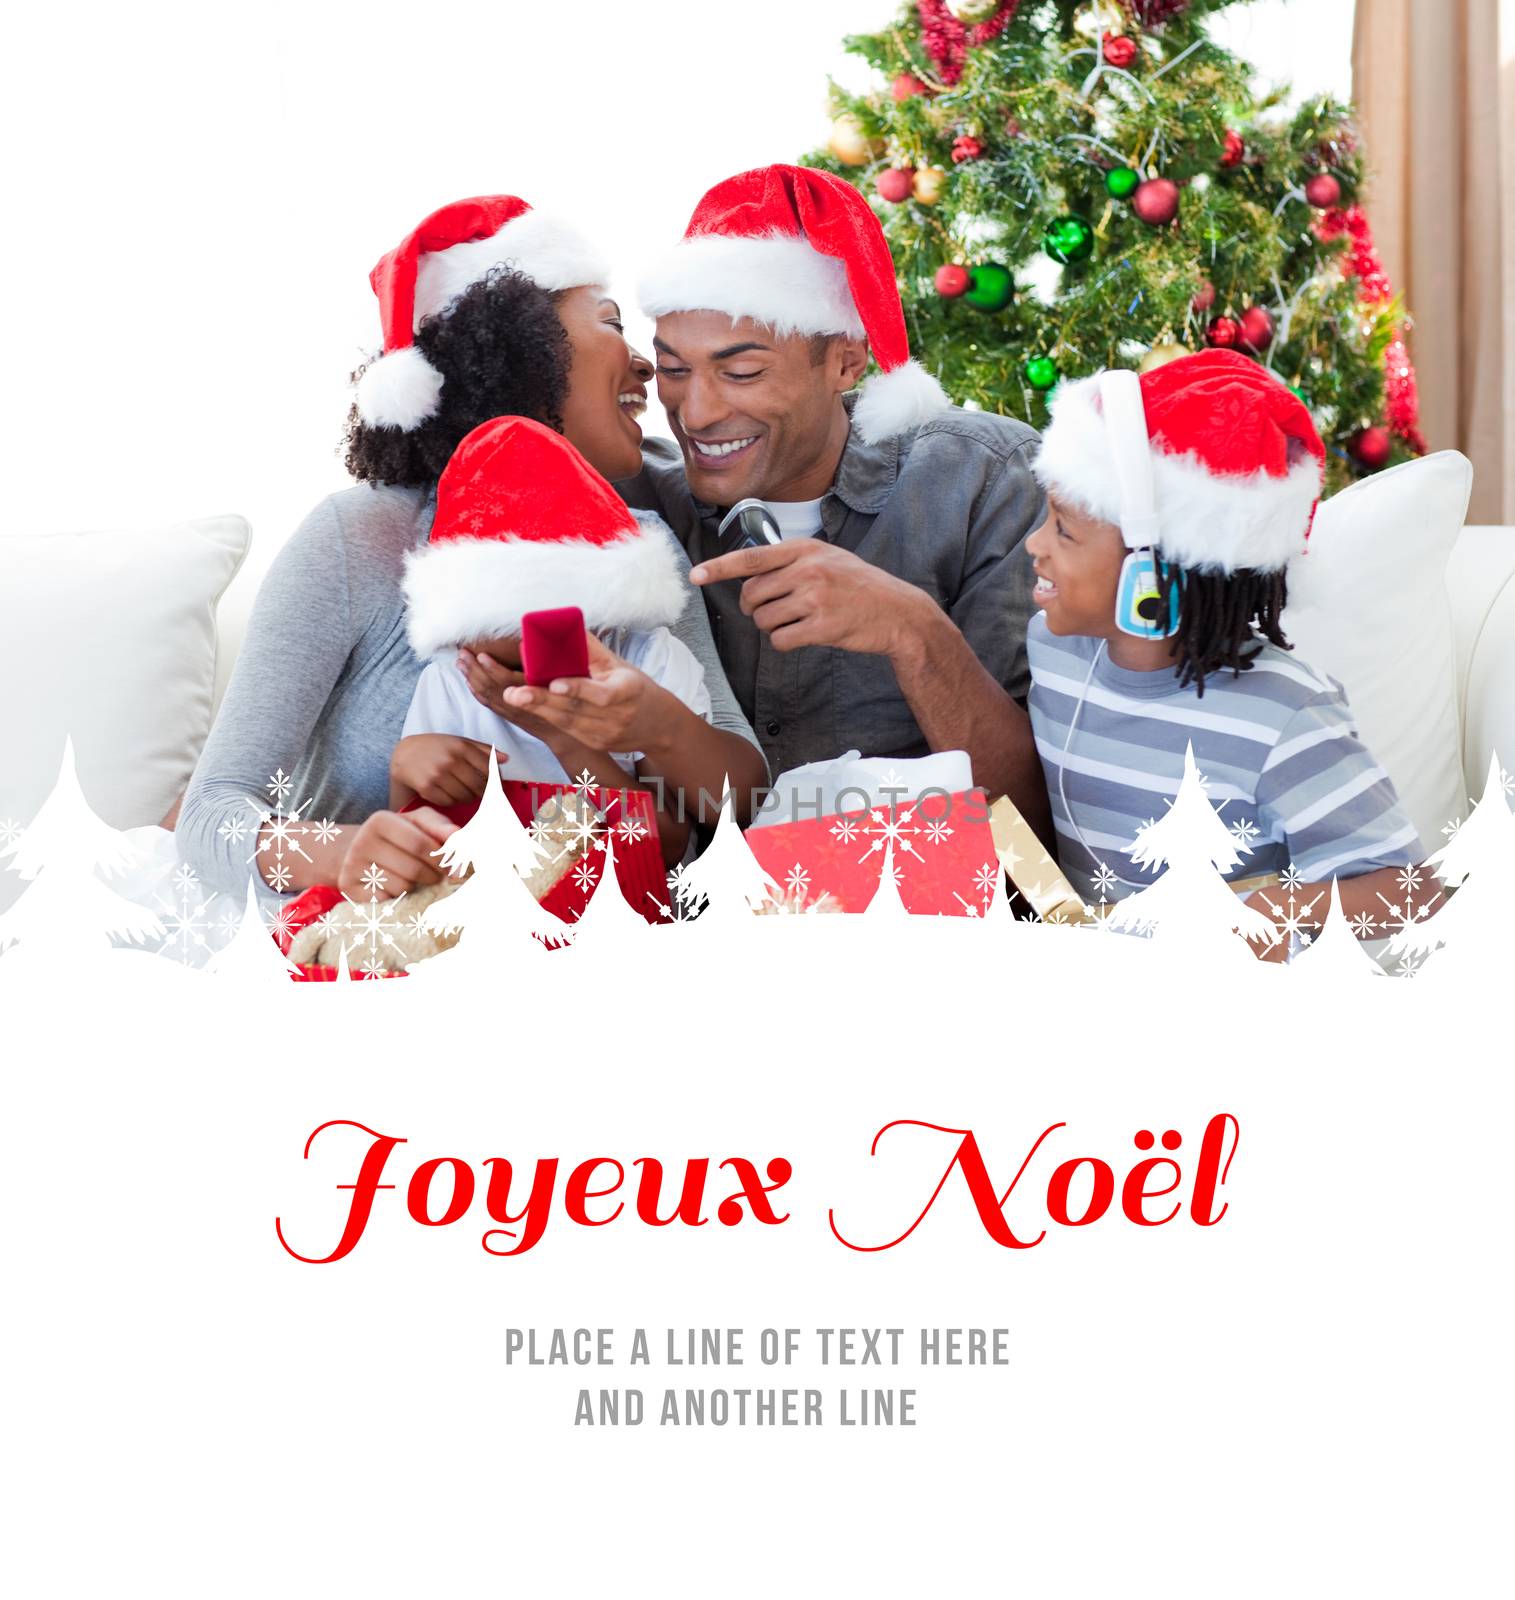 Happy family having fun with Christmas presents against joyeux noel